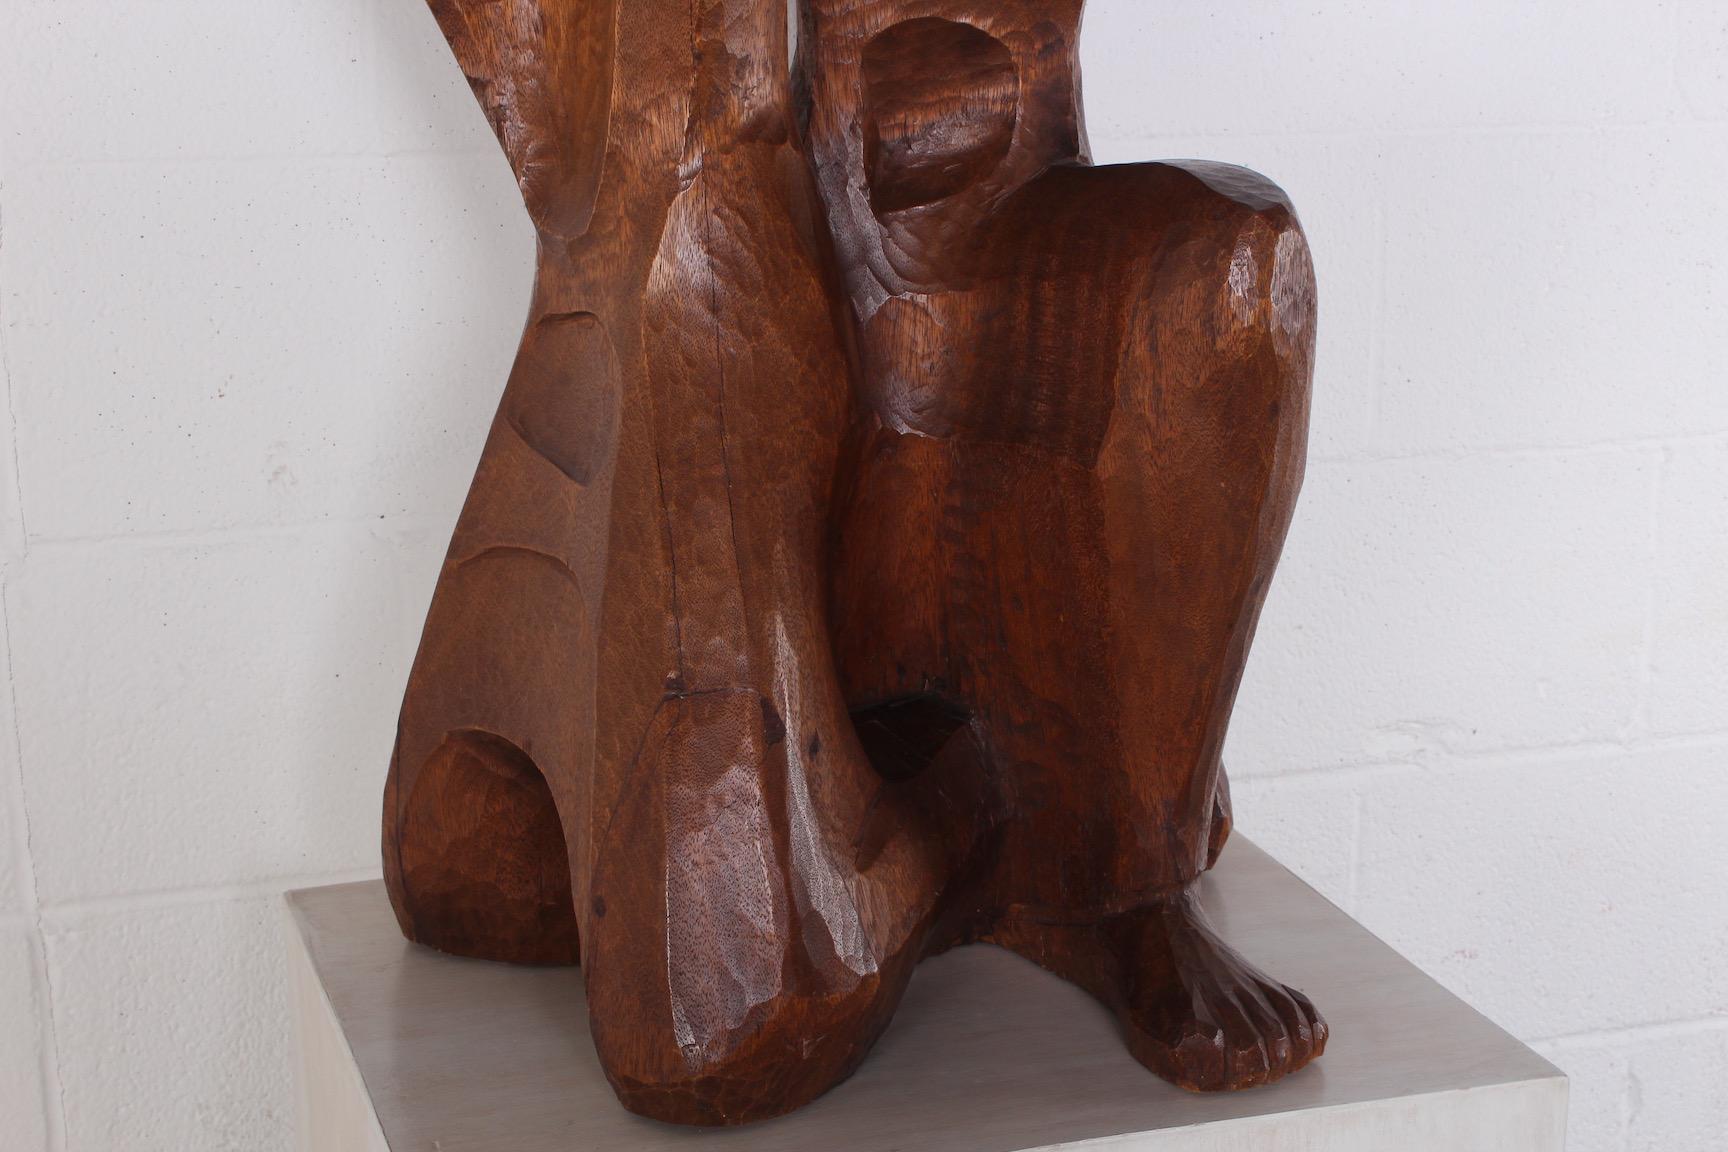 Wood Large Figurative Sculpture by Walter Midener, 1959